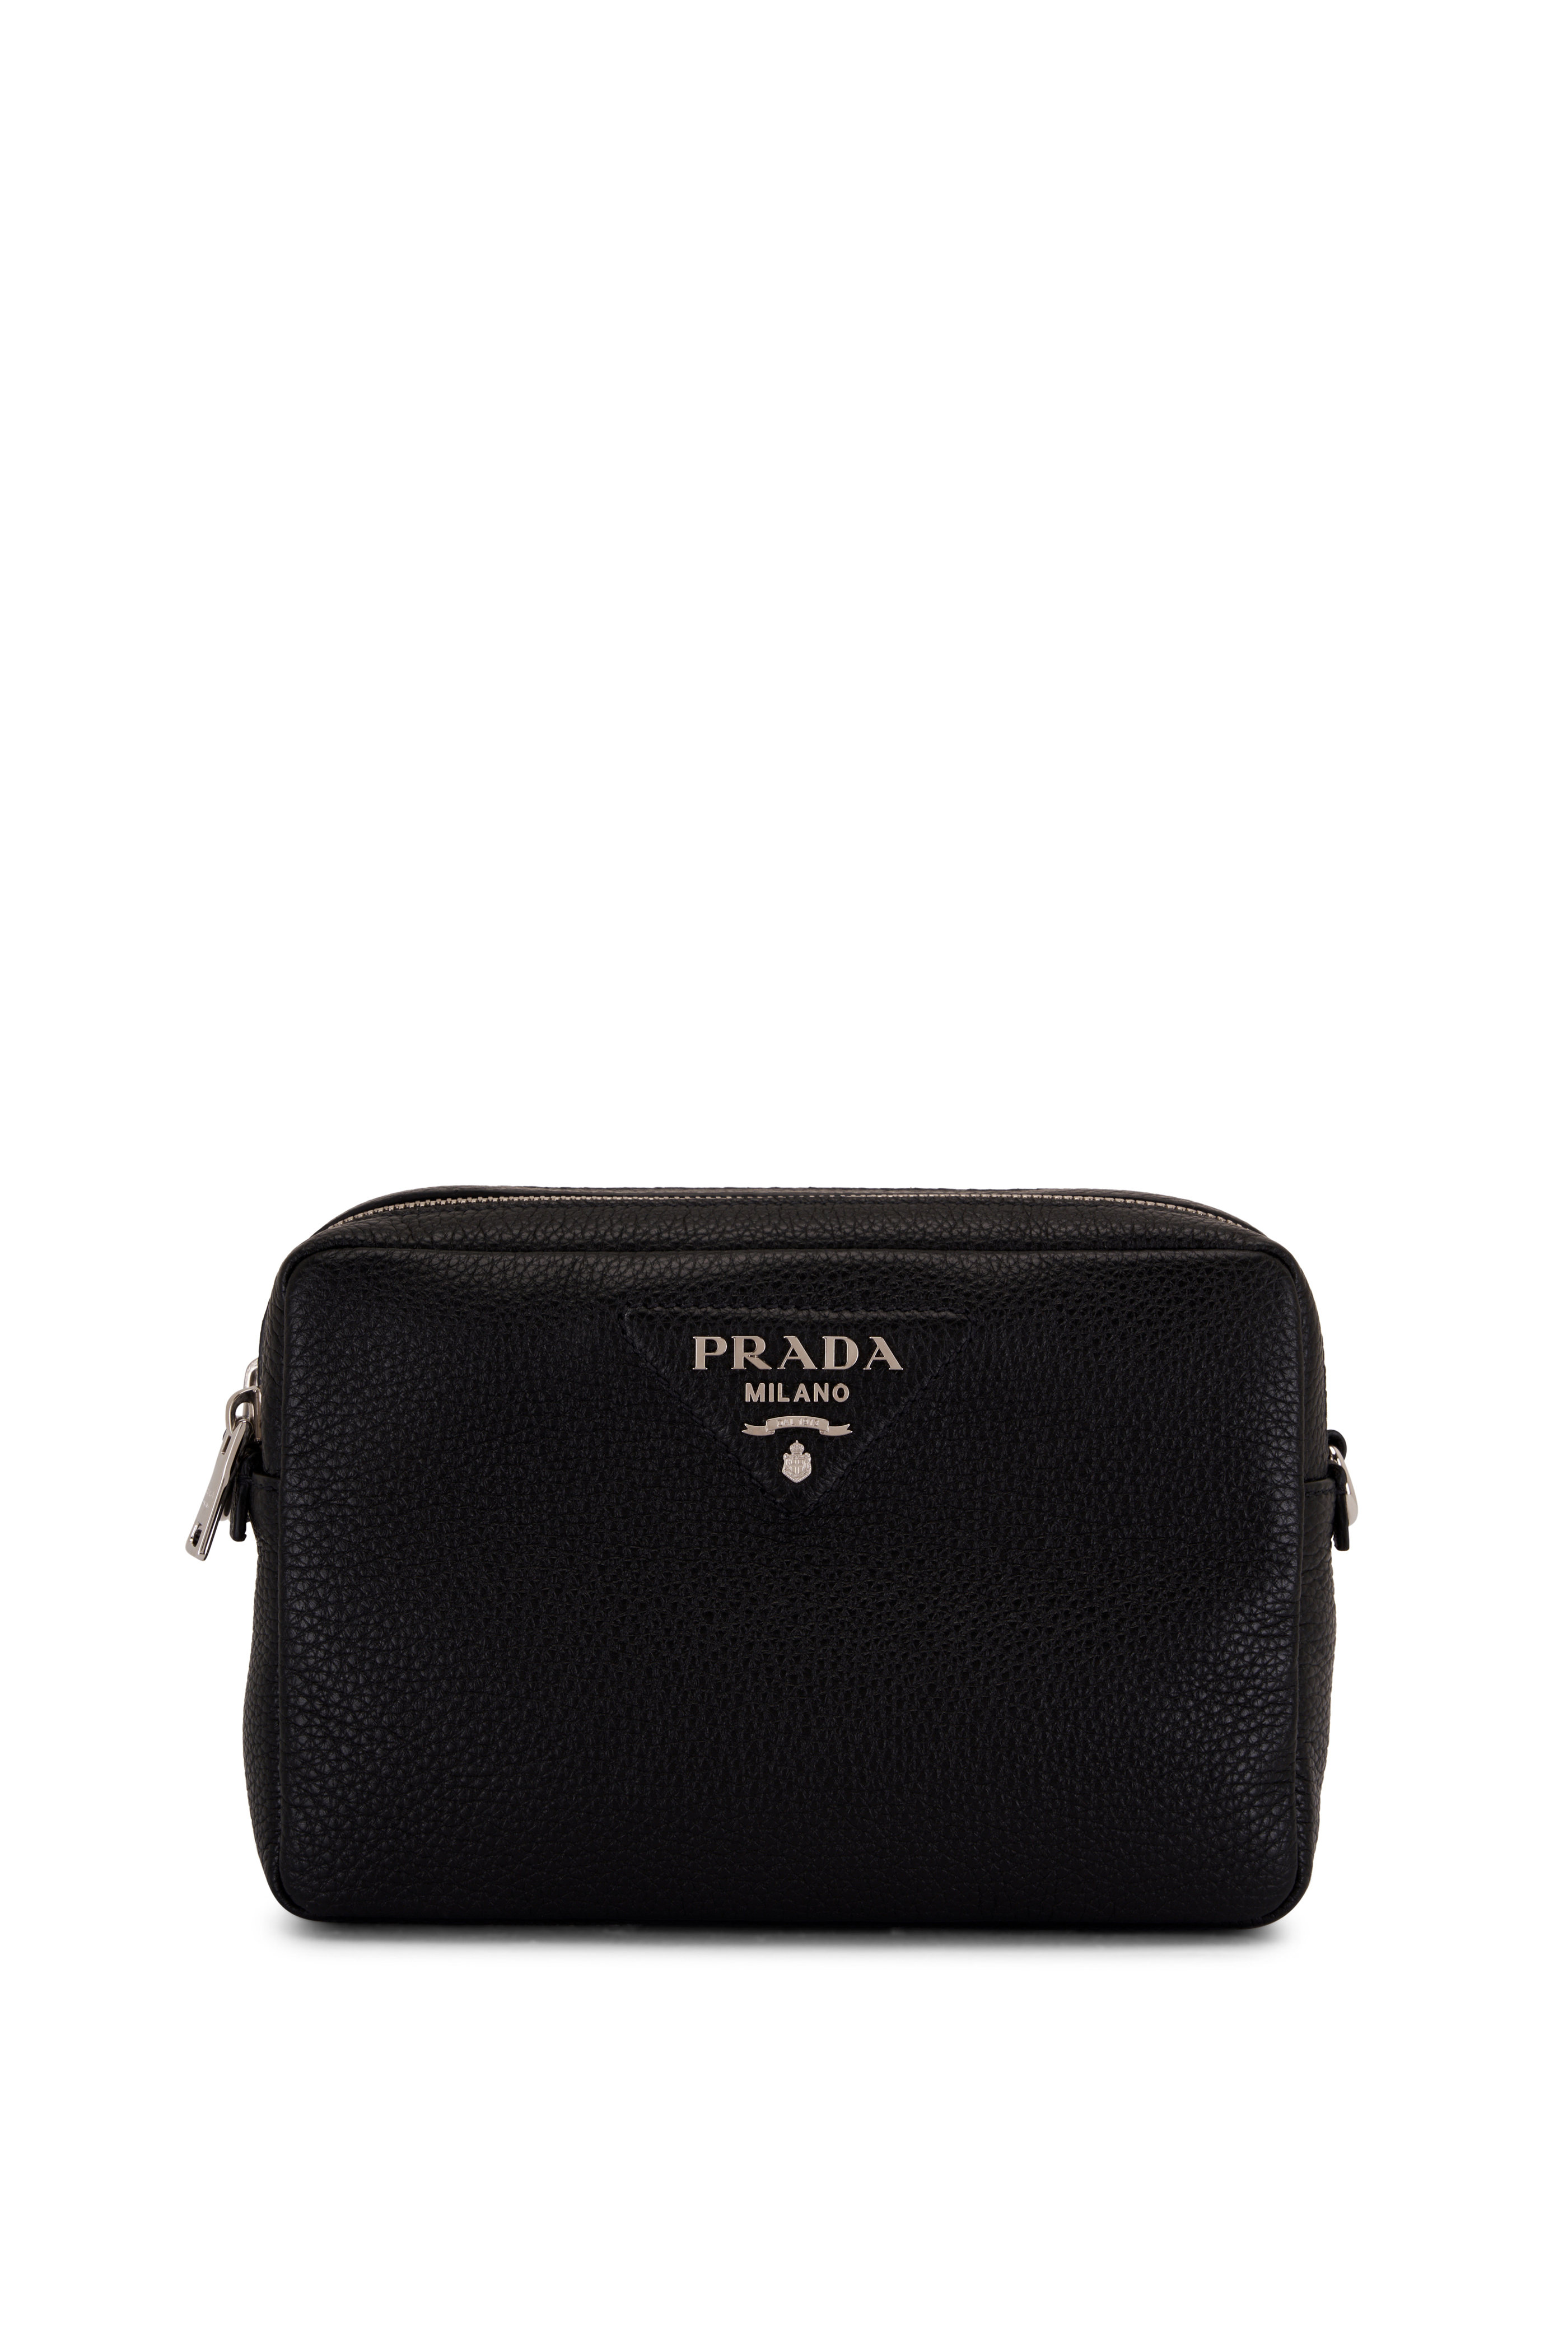 Prada Emblème brushed leather bag in Black with triangle logo - I-MAGAZINE  Inc